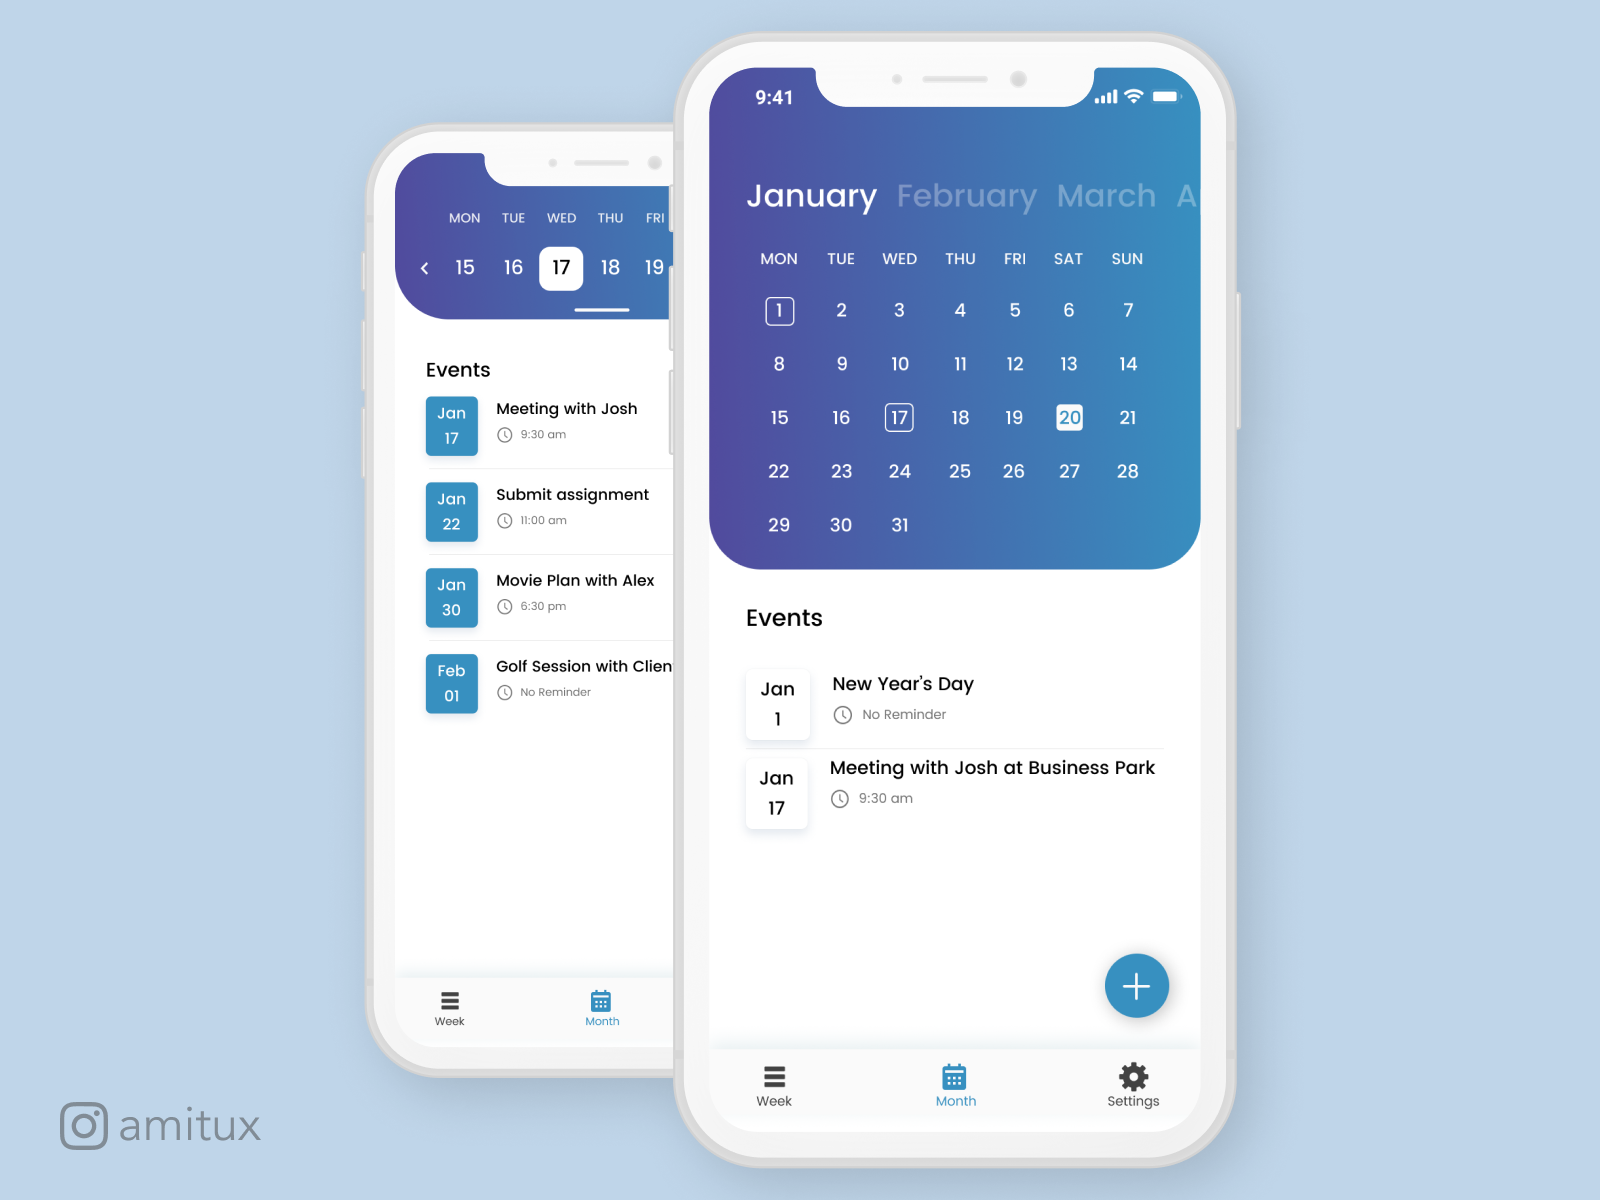 Calendar App UI Design by Amit Arora on Dribbble